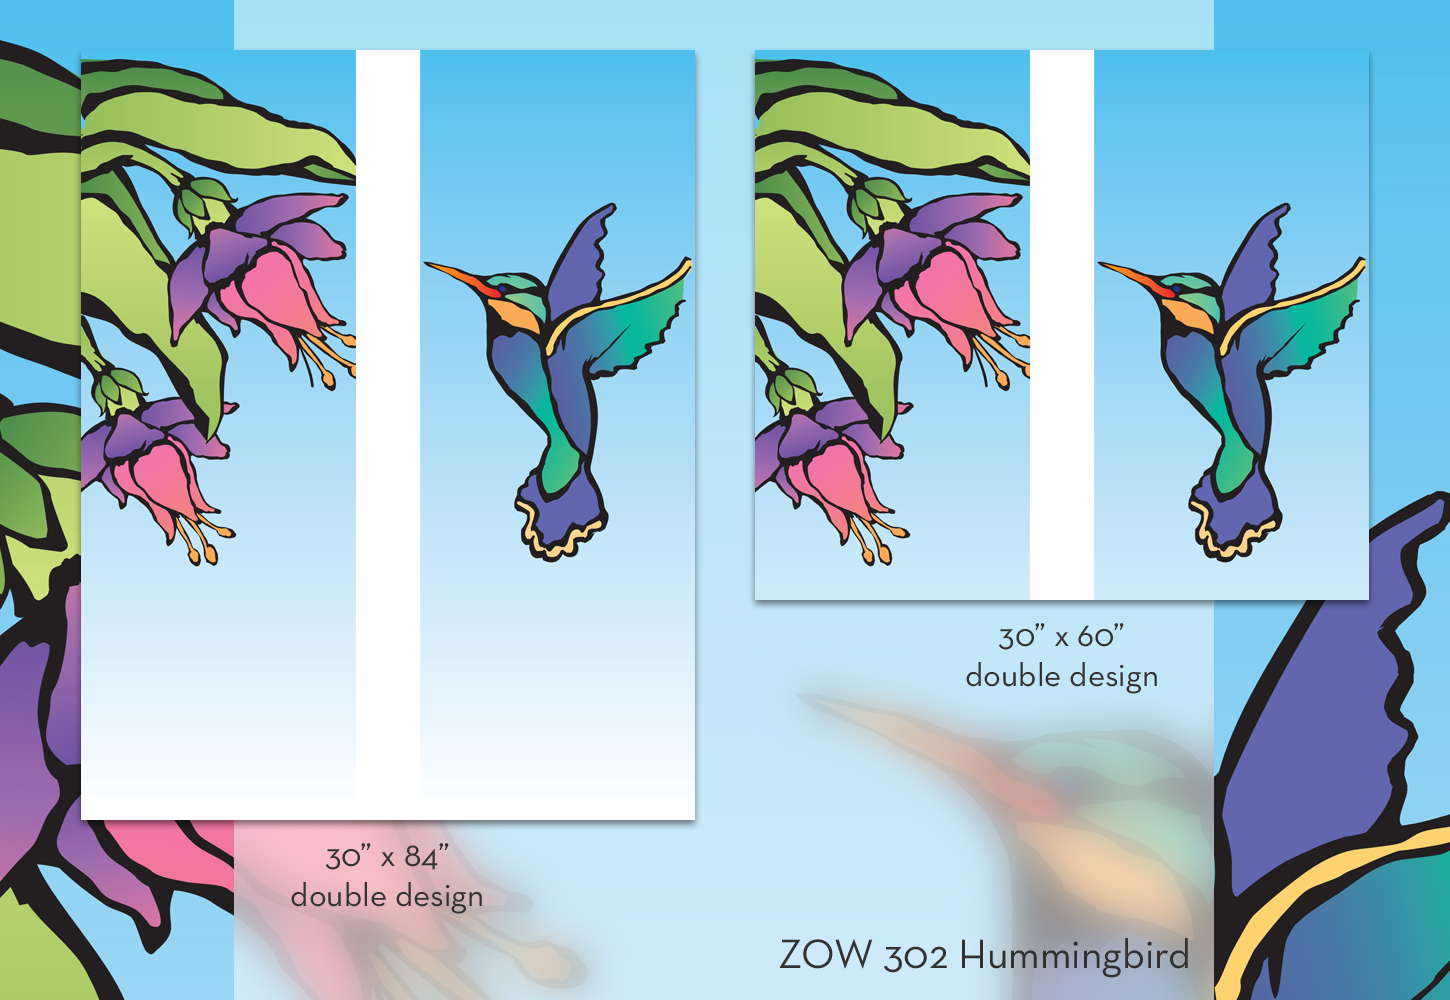 ZOW 302 Hummingbird